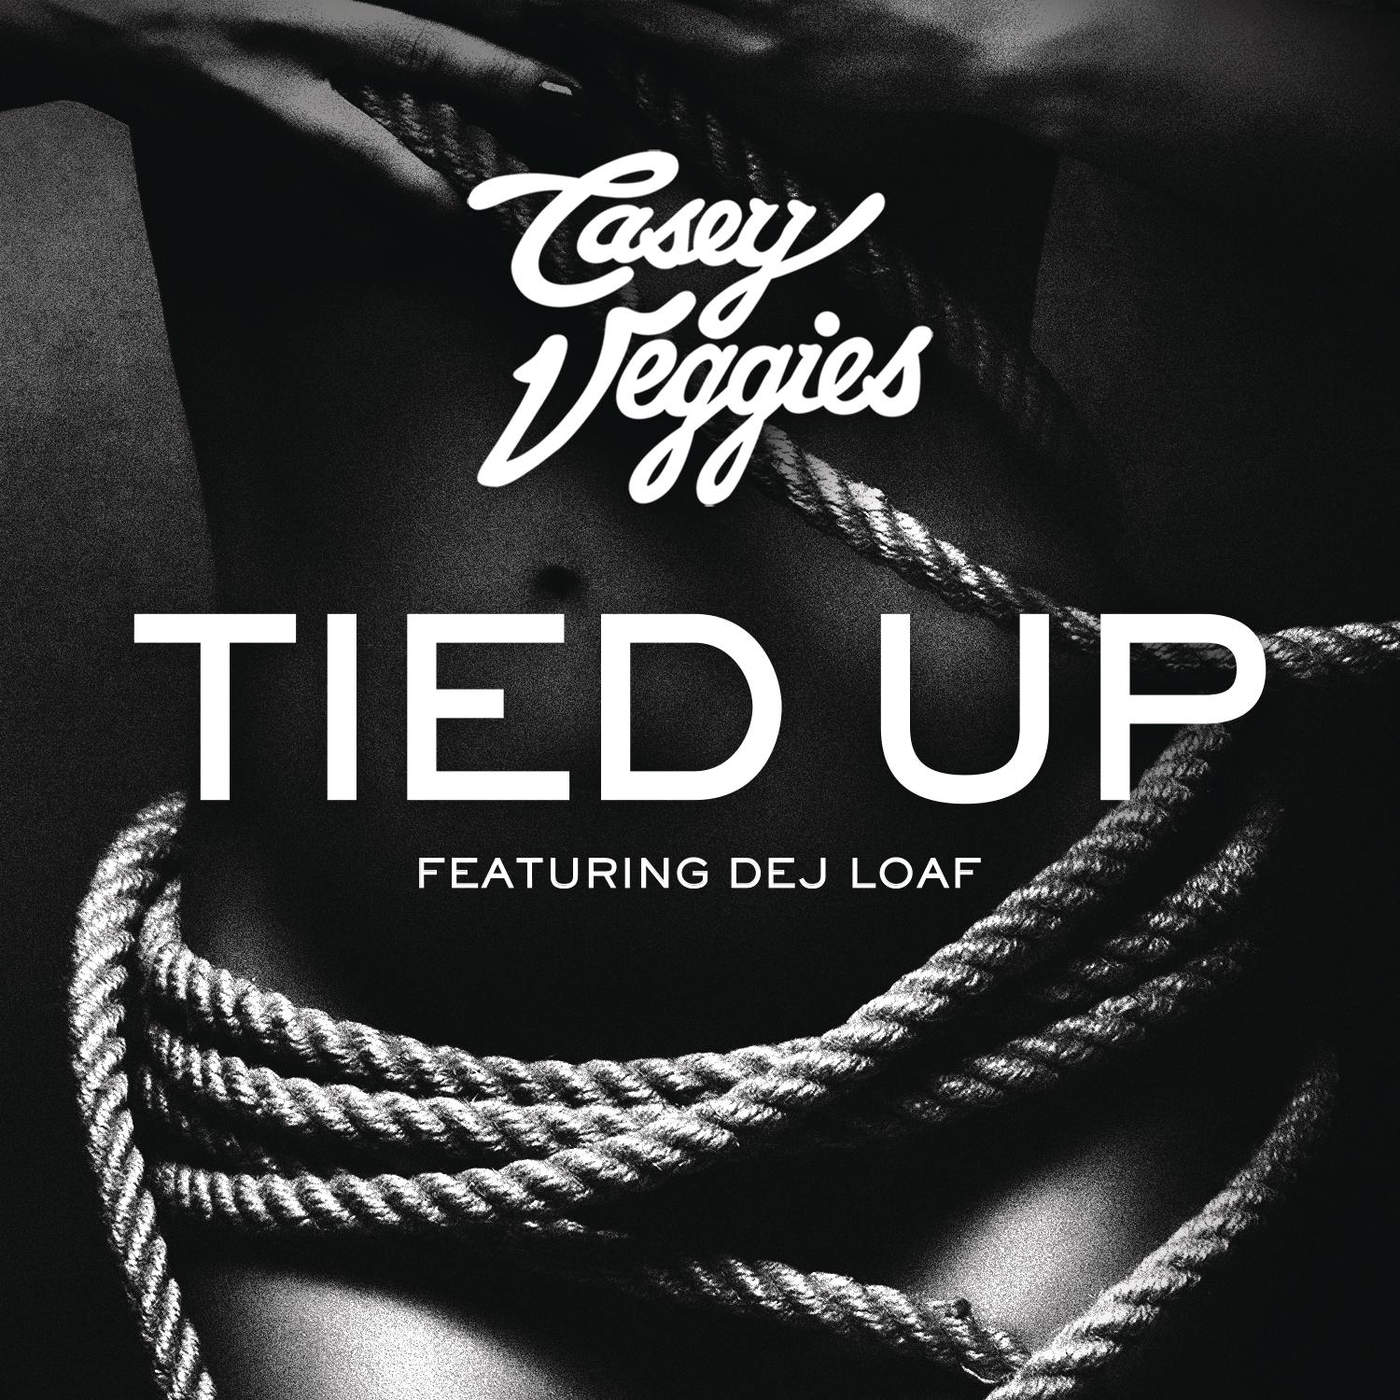 Casey Veggies ft. DeJ Loaf – “Tied Up” (Audio)